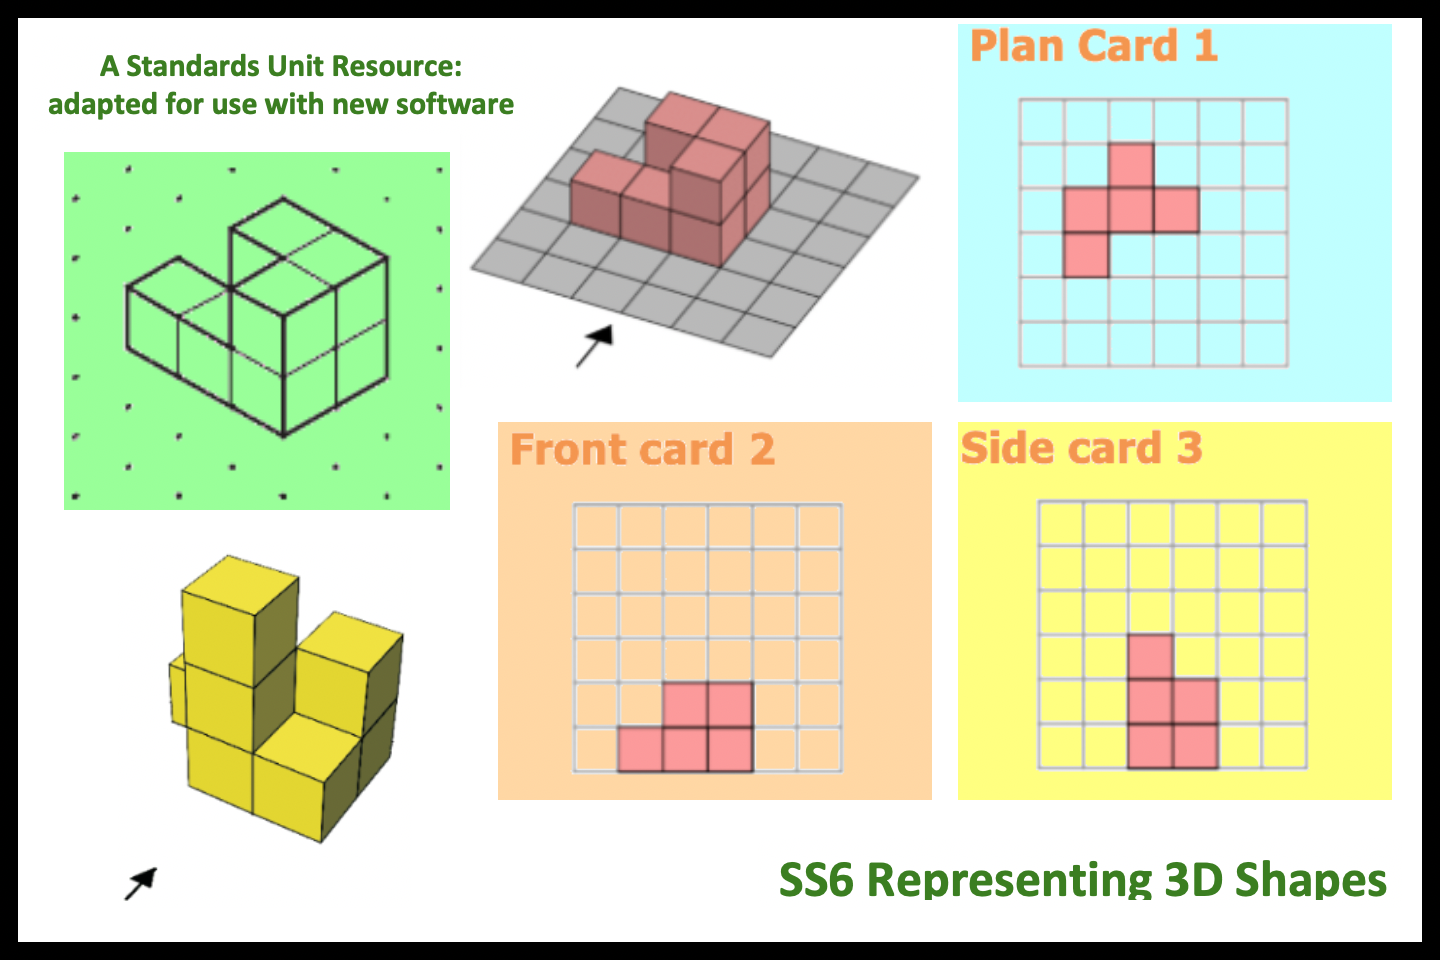 SS6 Representing 3D Shapes